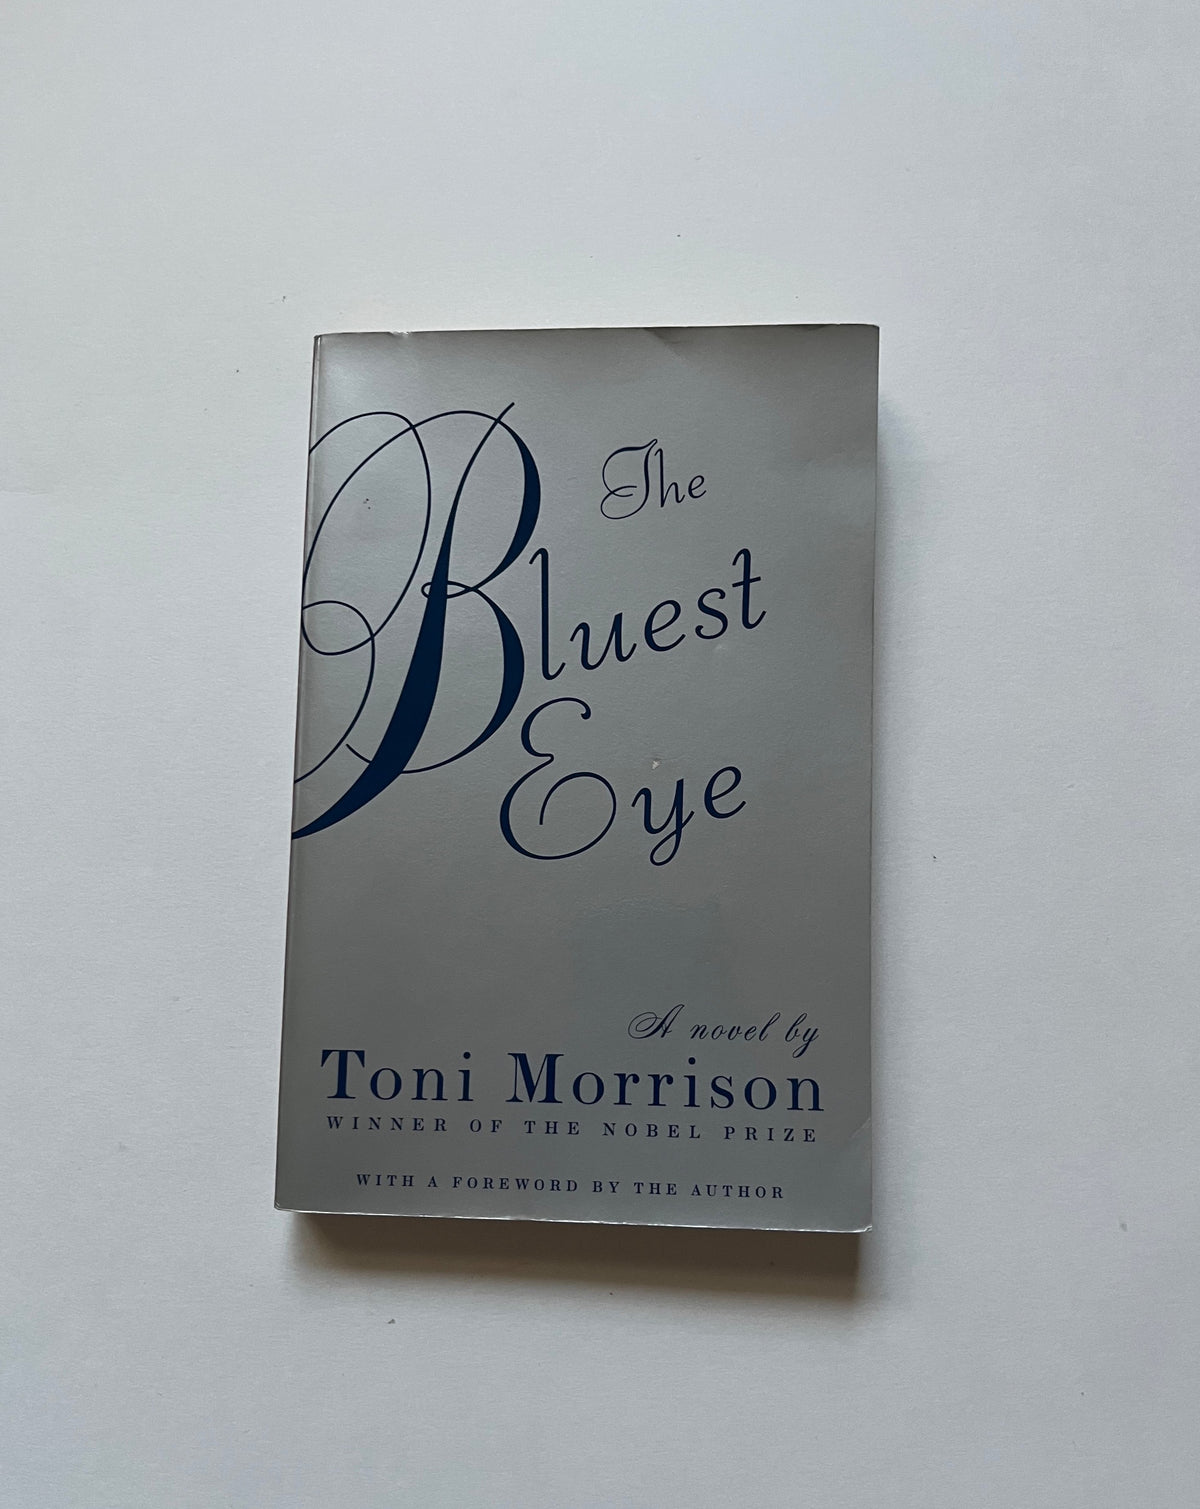 The Bluest Eye by Toni Morrison